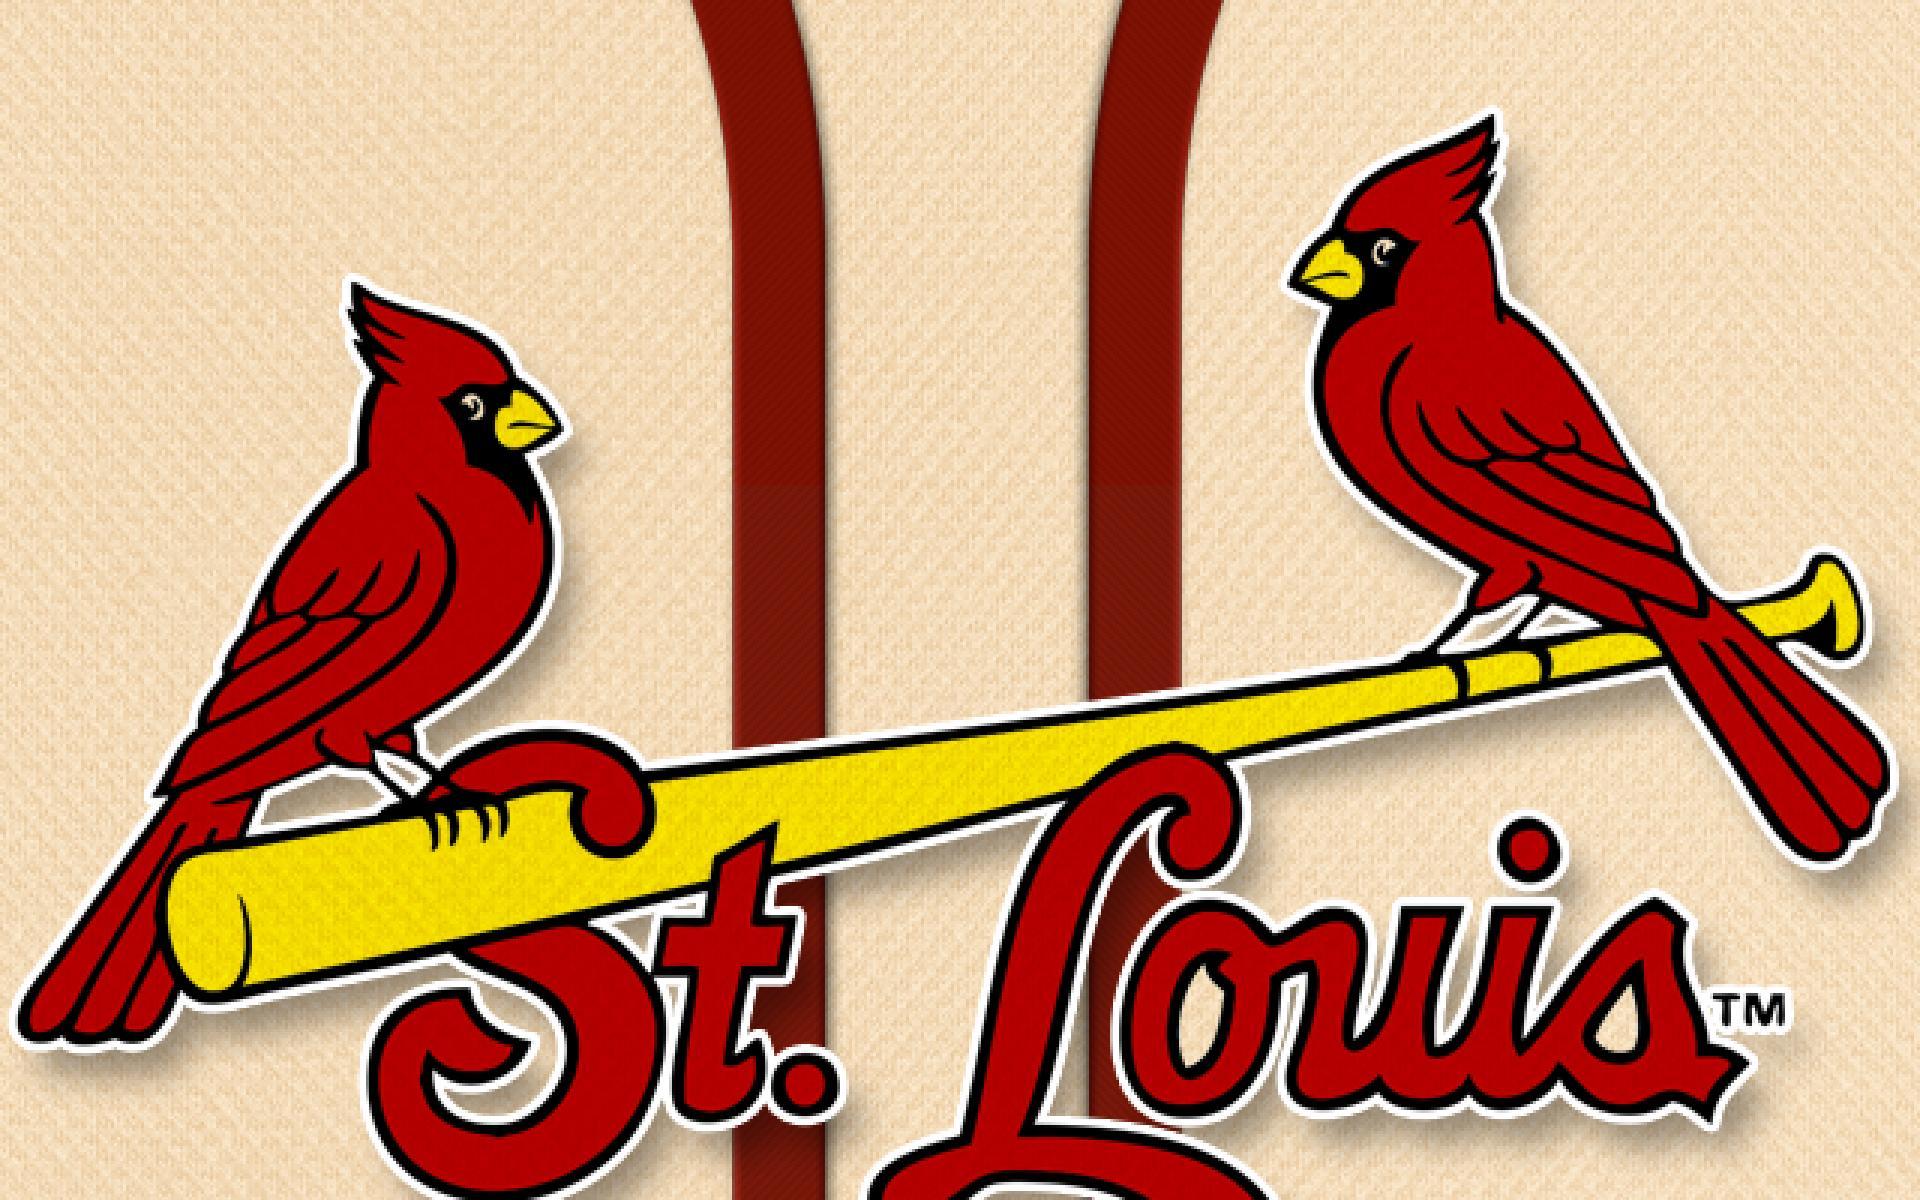 ST Louis Cardinals Logo Backgrounds | PixelsTalk.Net